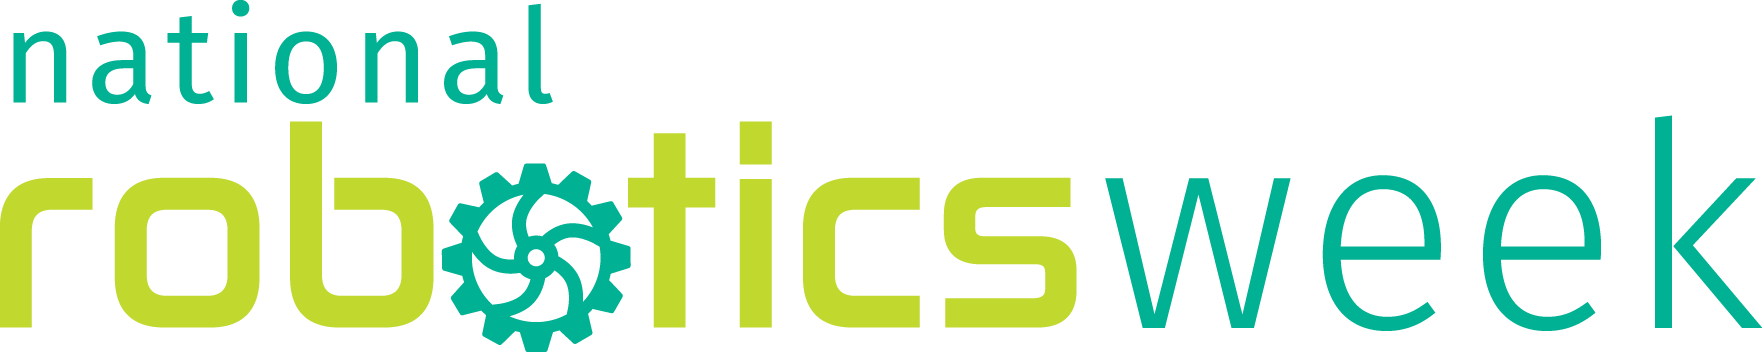 National Robotics Week Logo (no background)